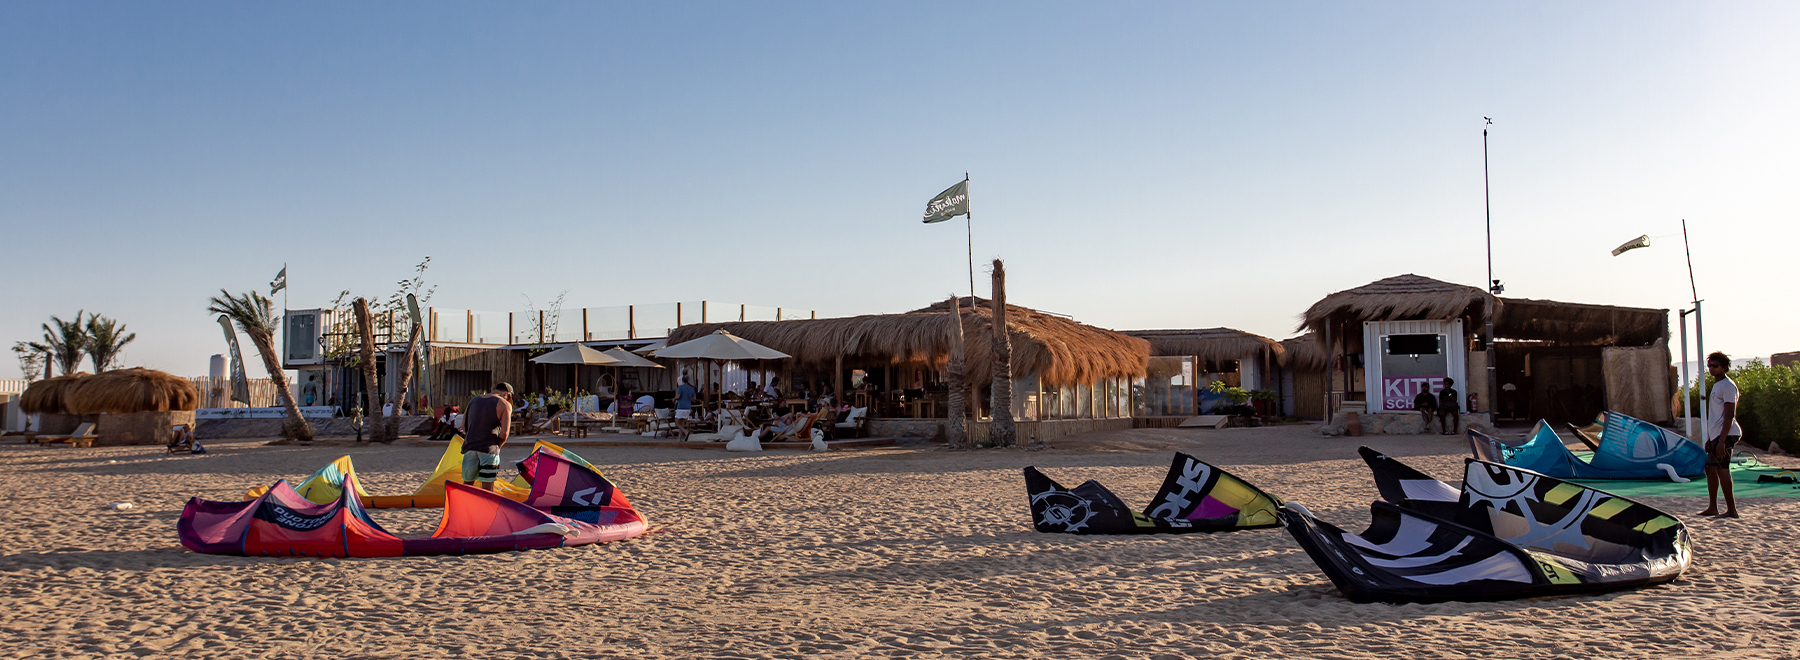 Kitesurfing In El Gouna Egypt Kite Holiday With Kiteworldwide